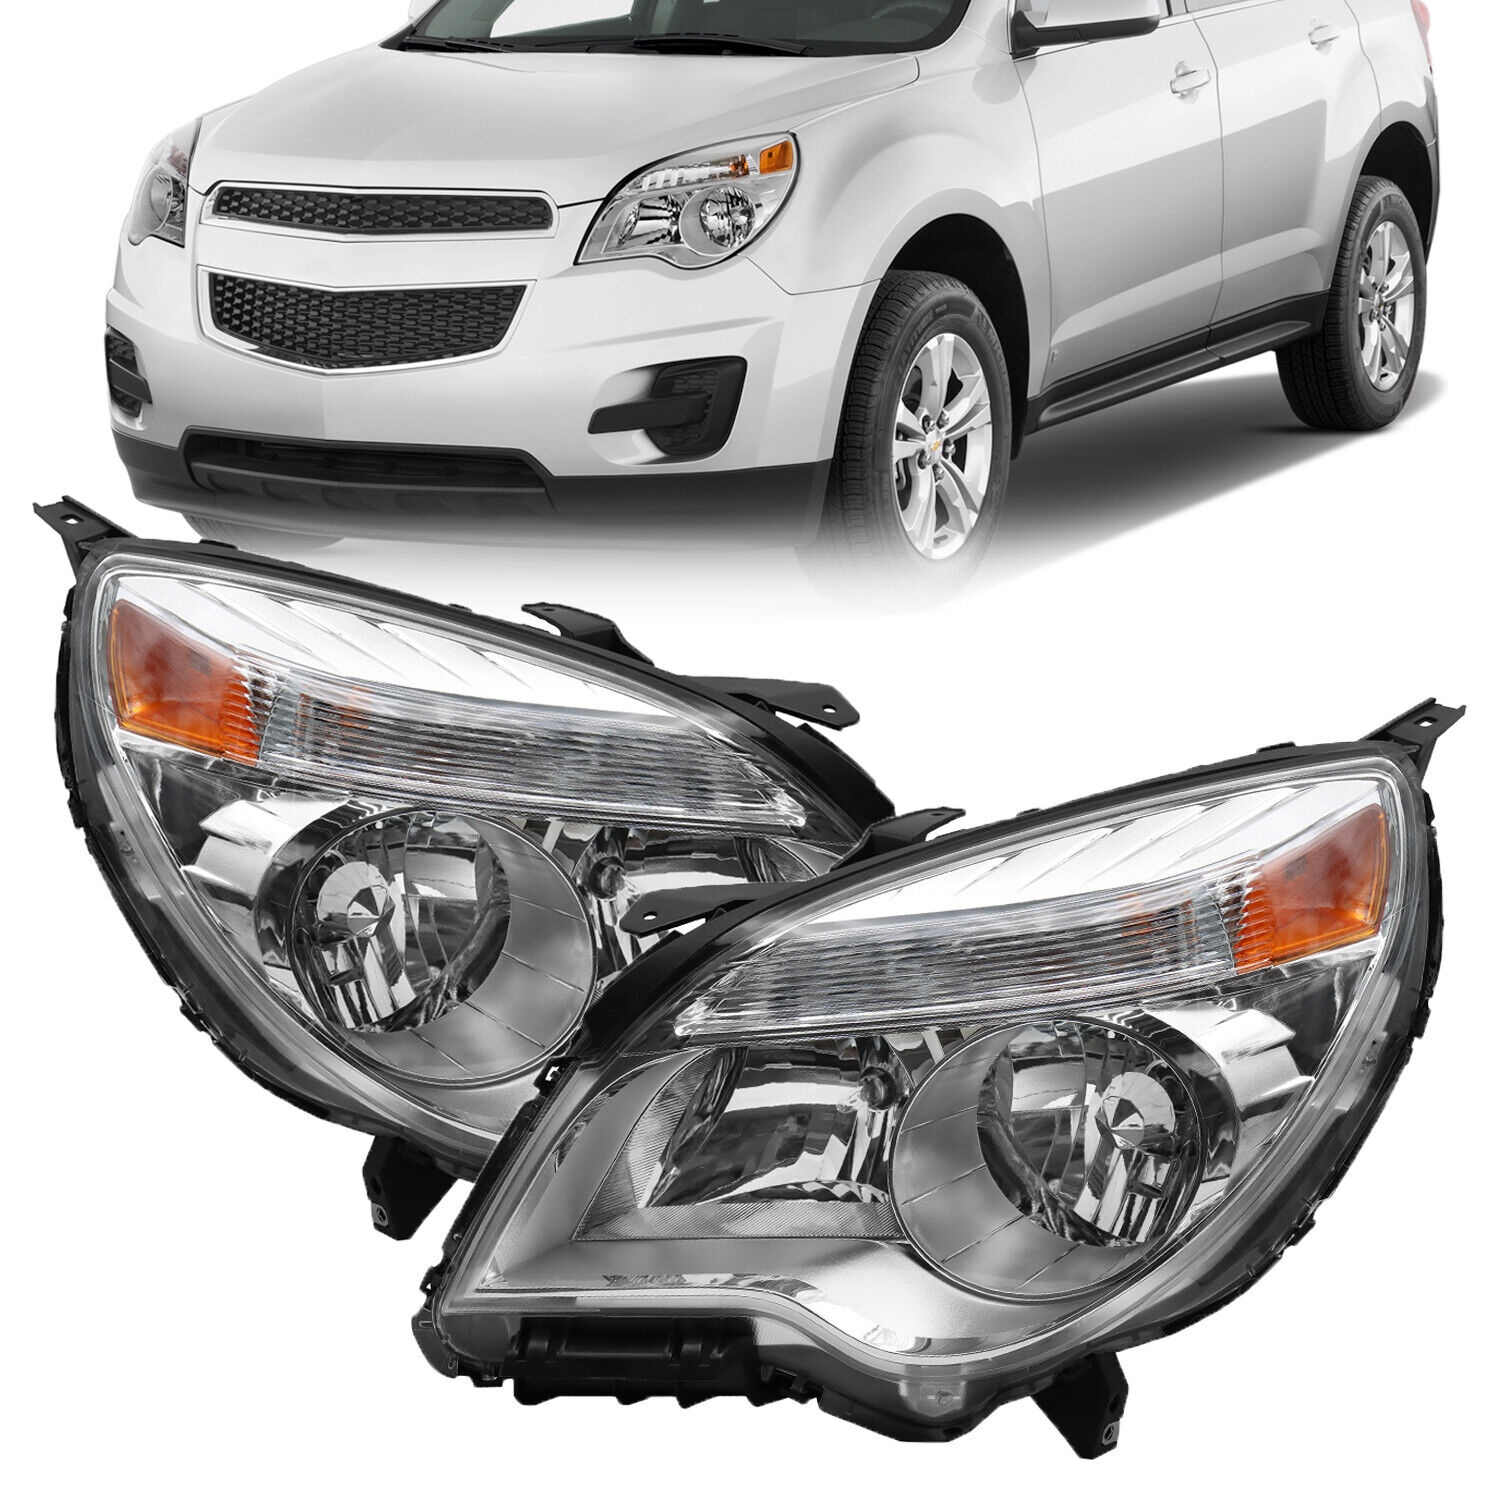 For Chevy Equinox 2010-2015 Headlights Headlamps Assembly Halogen LH&RH Set